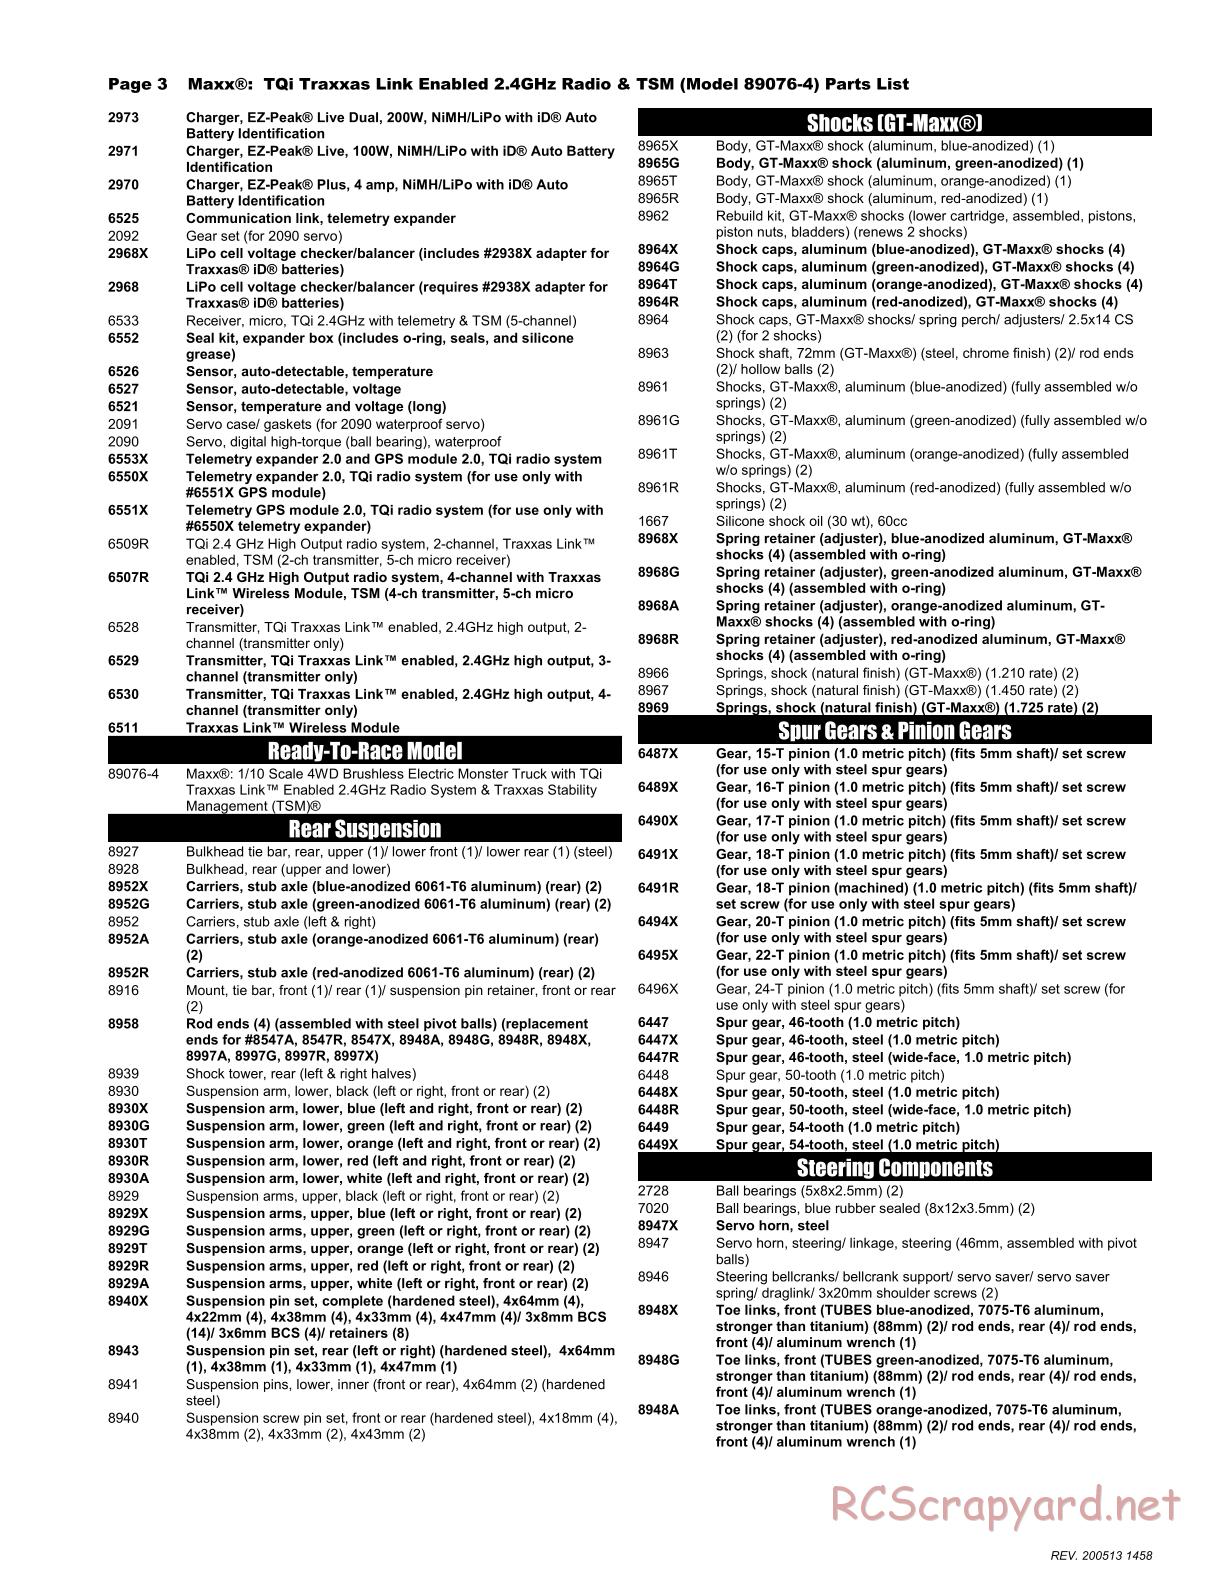 Traxxas - Maxx - Parts List - Page 3